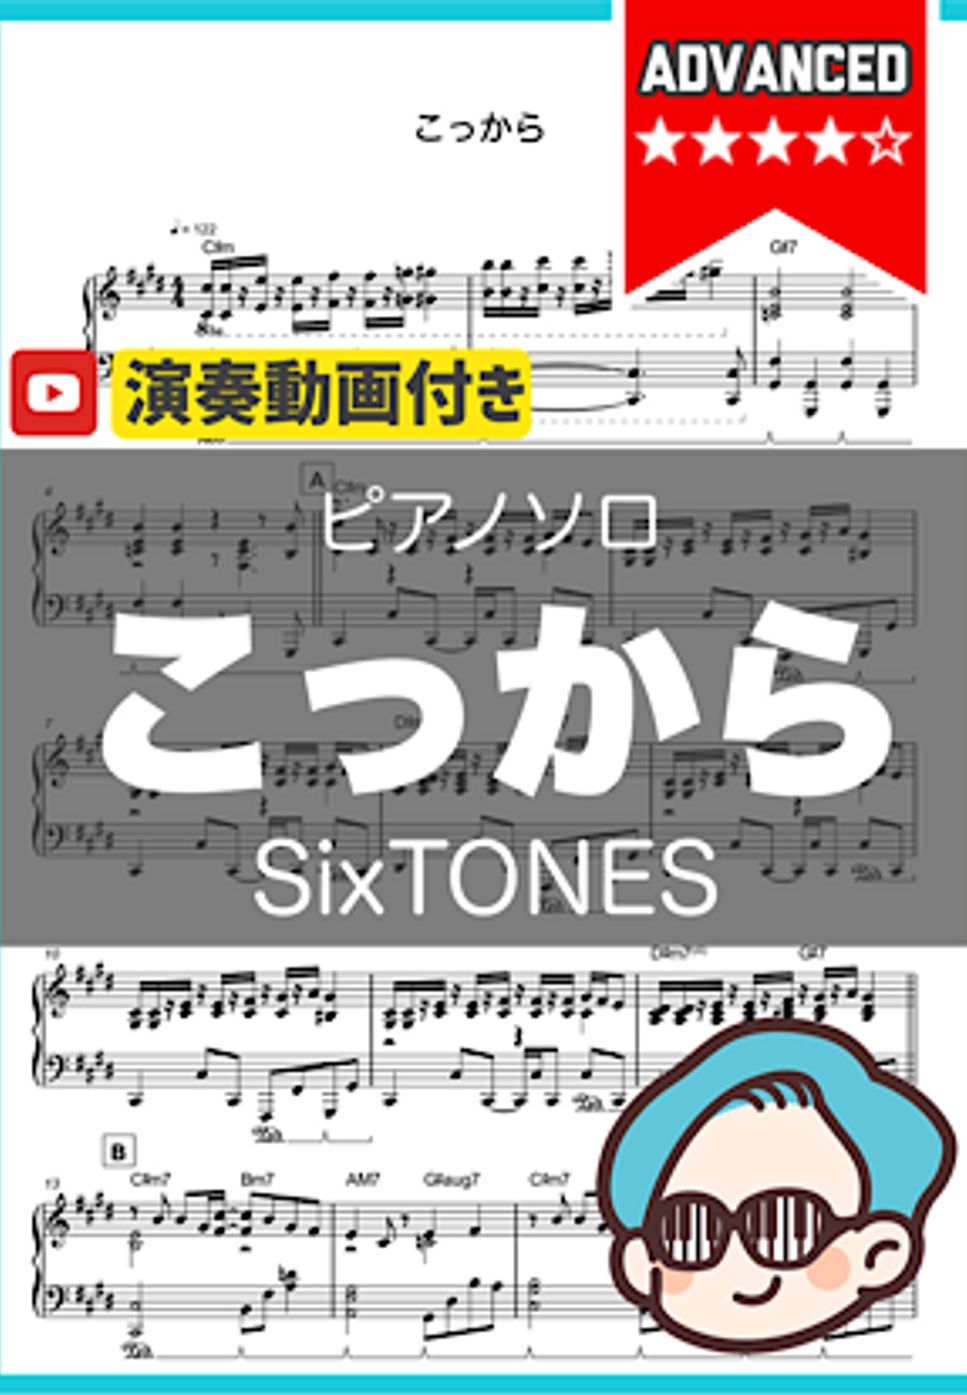 SixTONES - こっから by シータピアノ